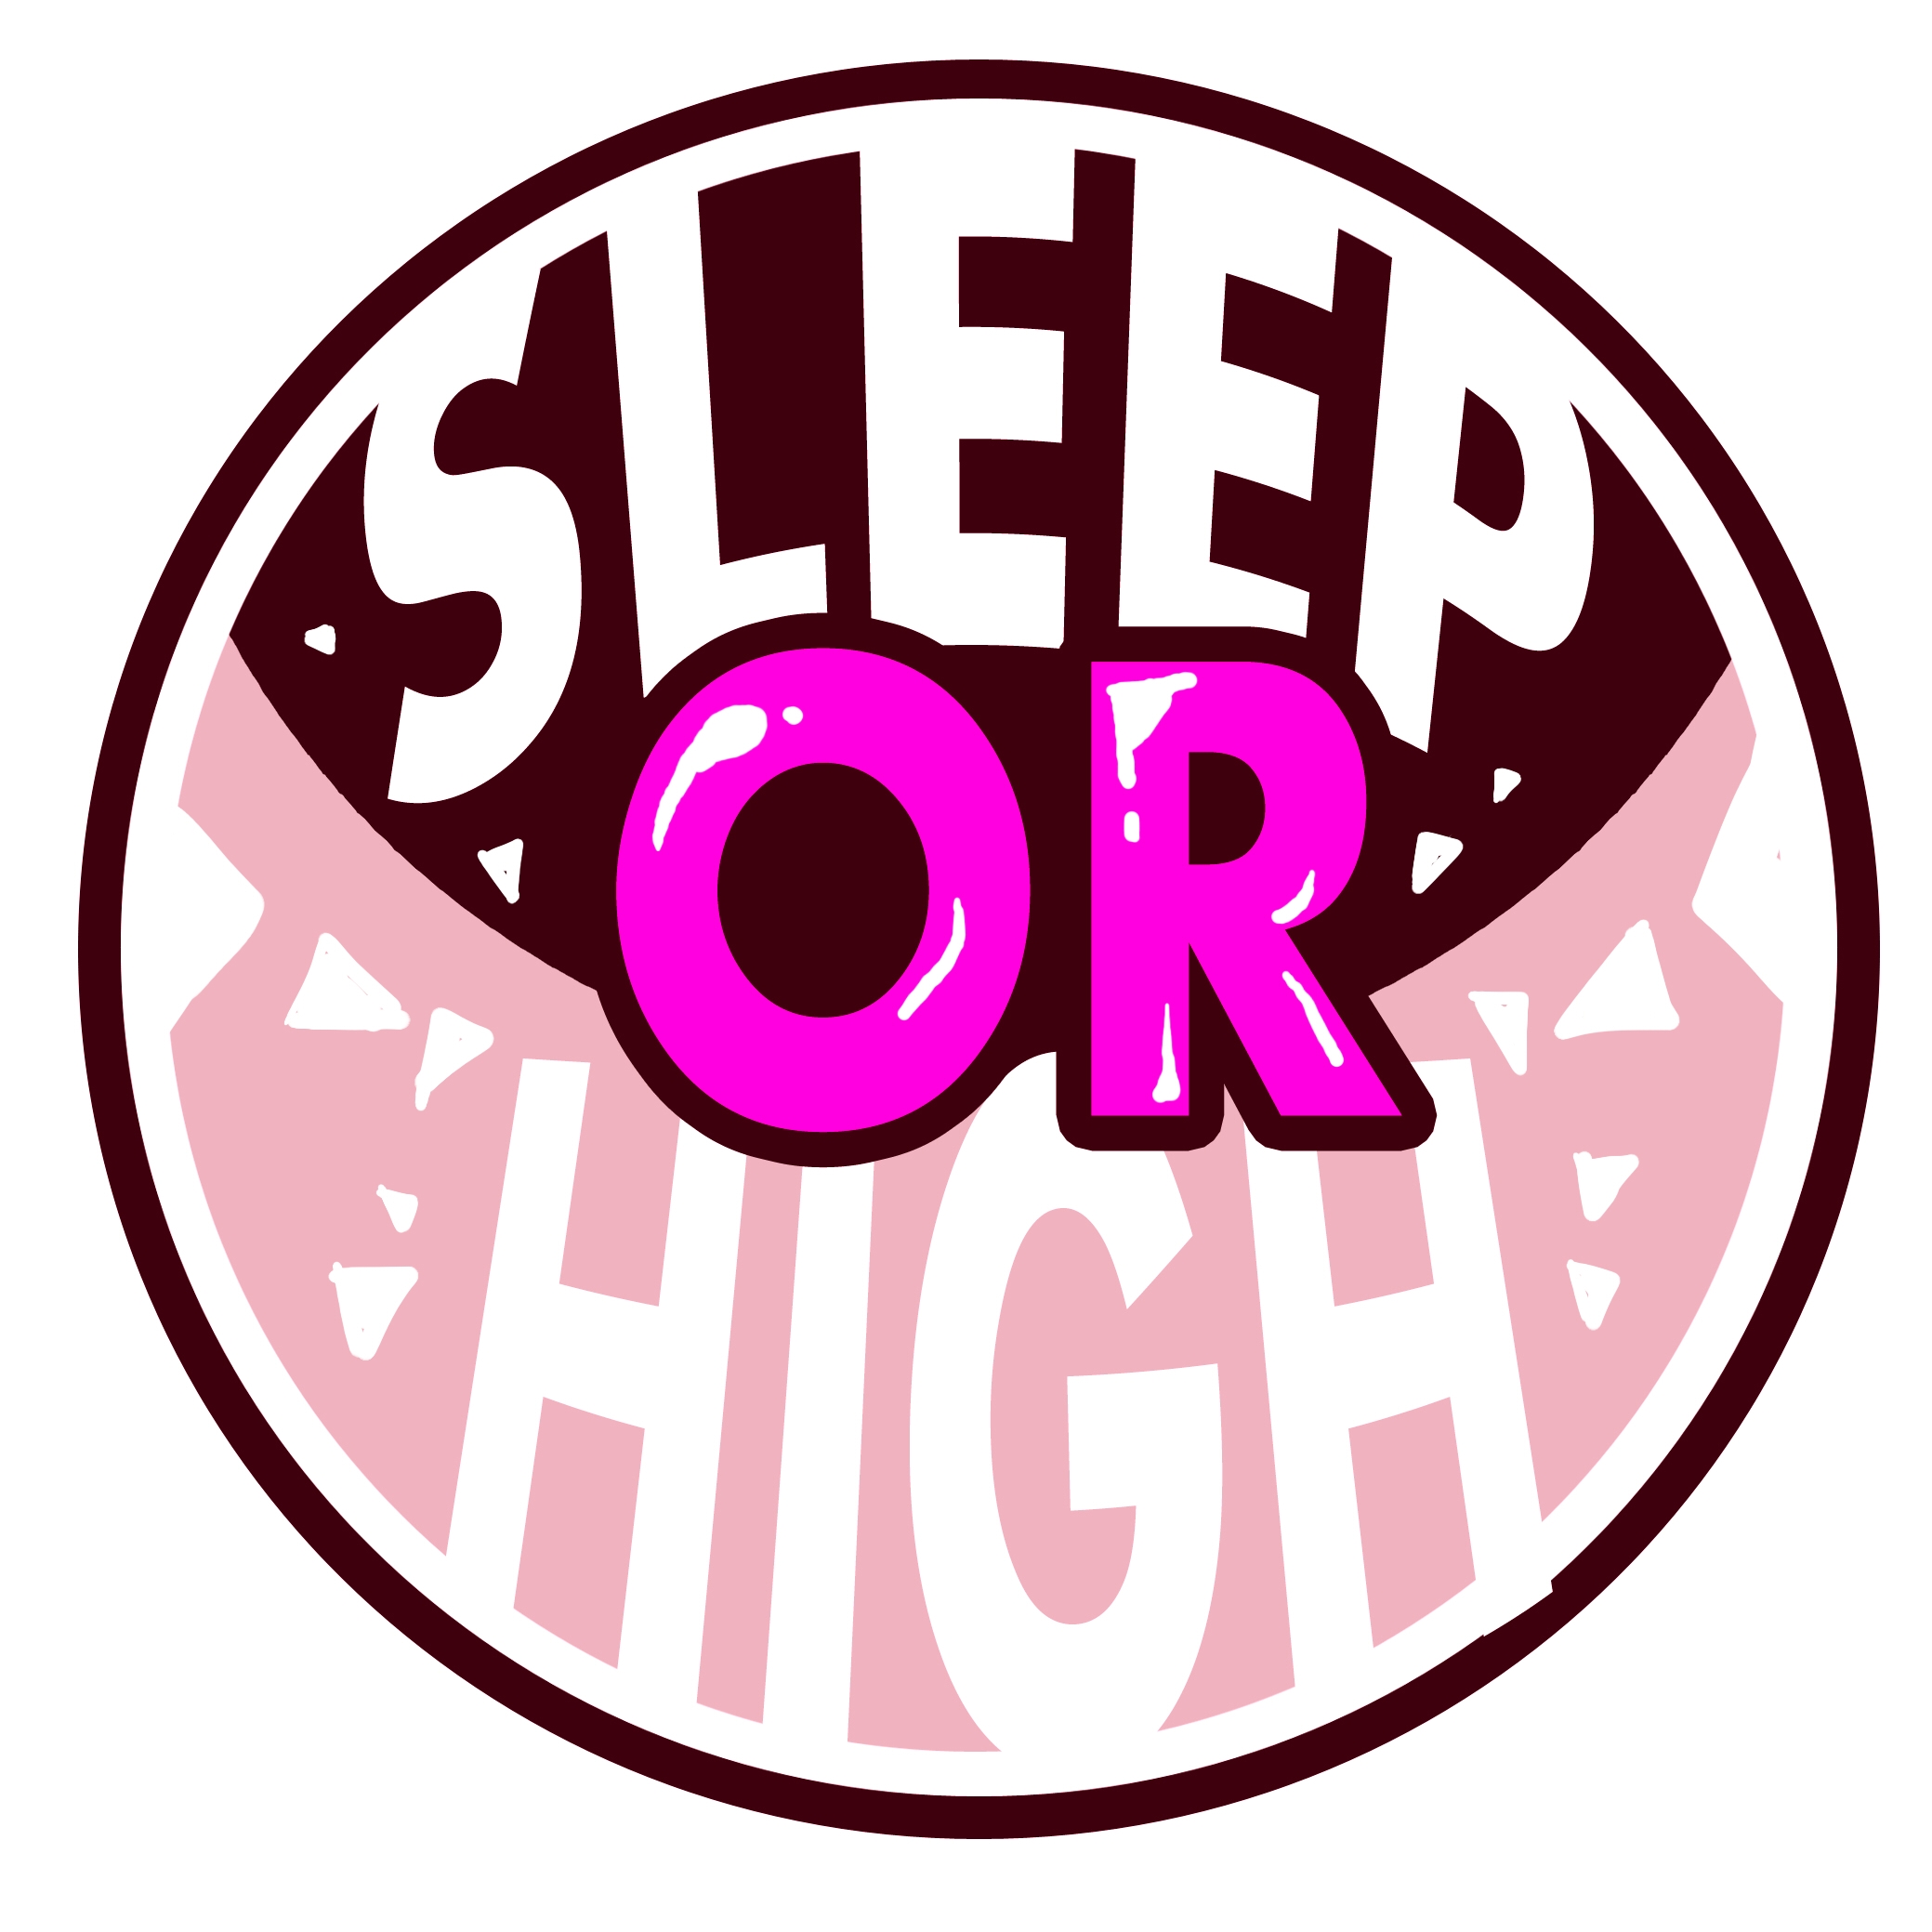 SLEEP OR HIGH?!